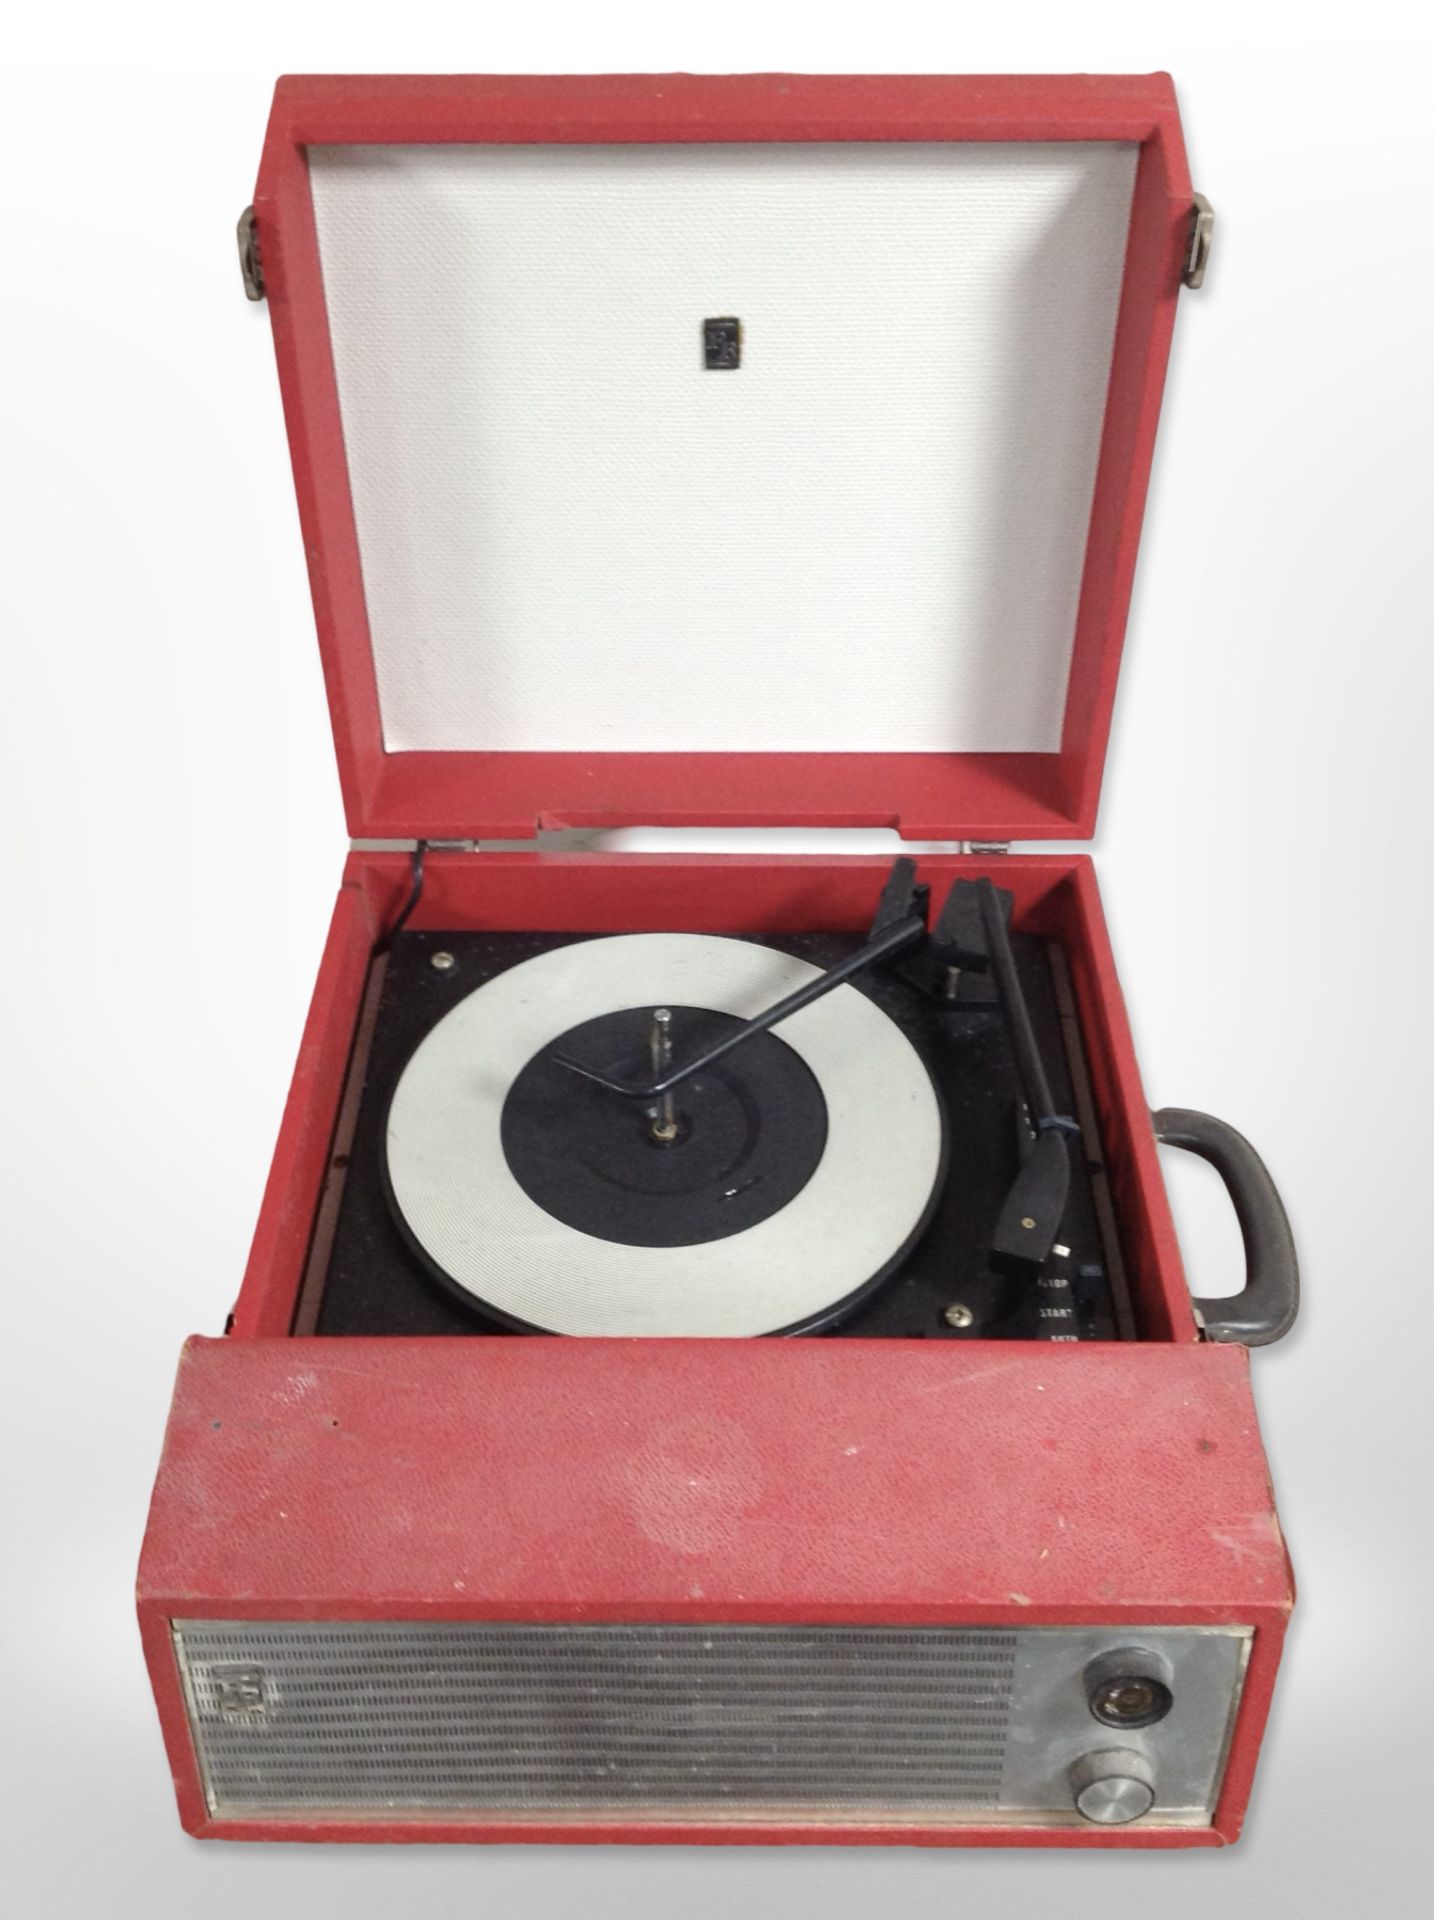 A vintage Portadyne Radio and TV record player